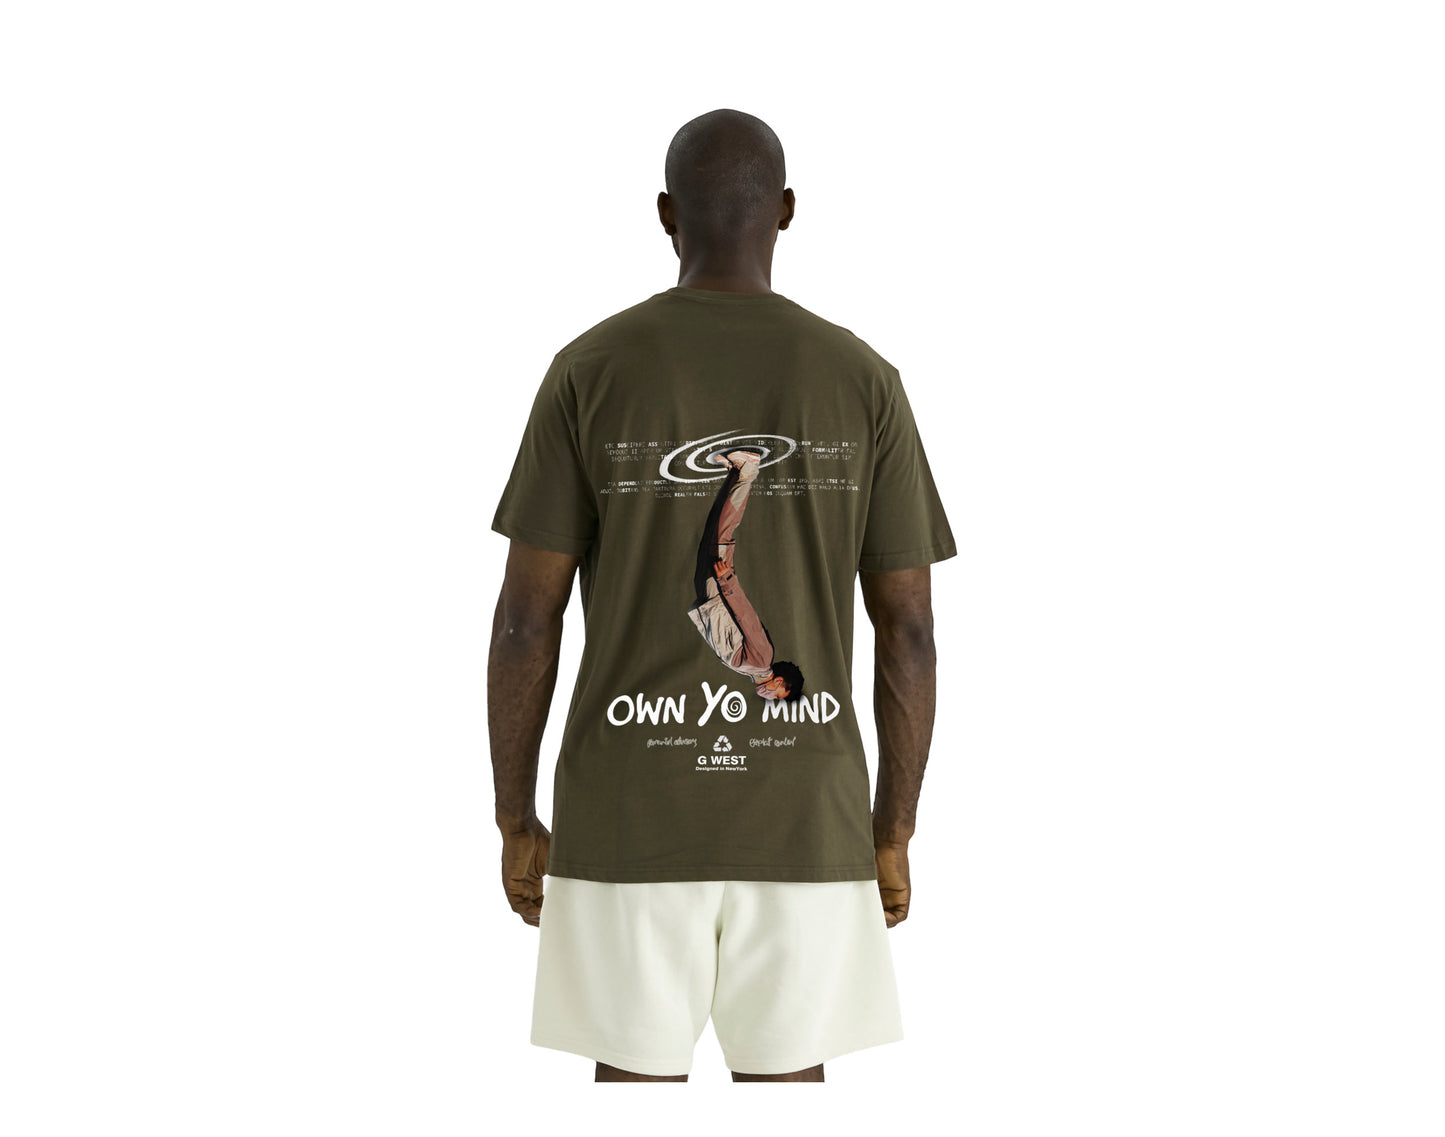 G West Own Yo Mind Graphic Crew Neck Men's T-Shirt